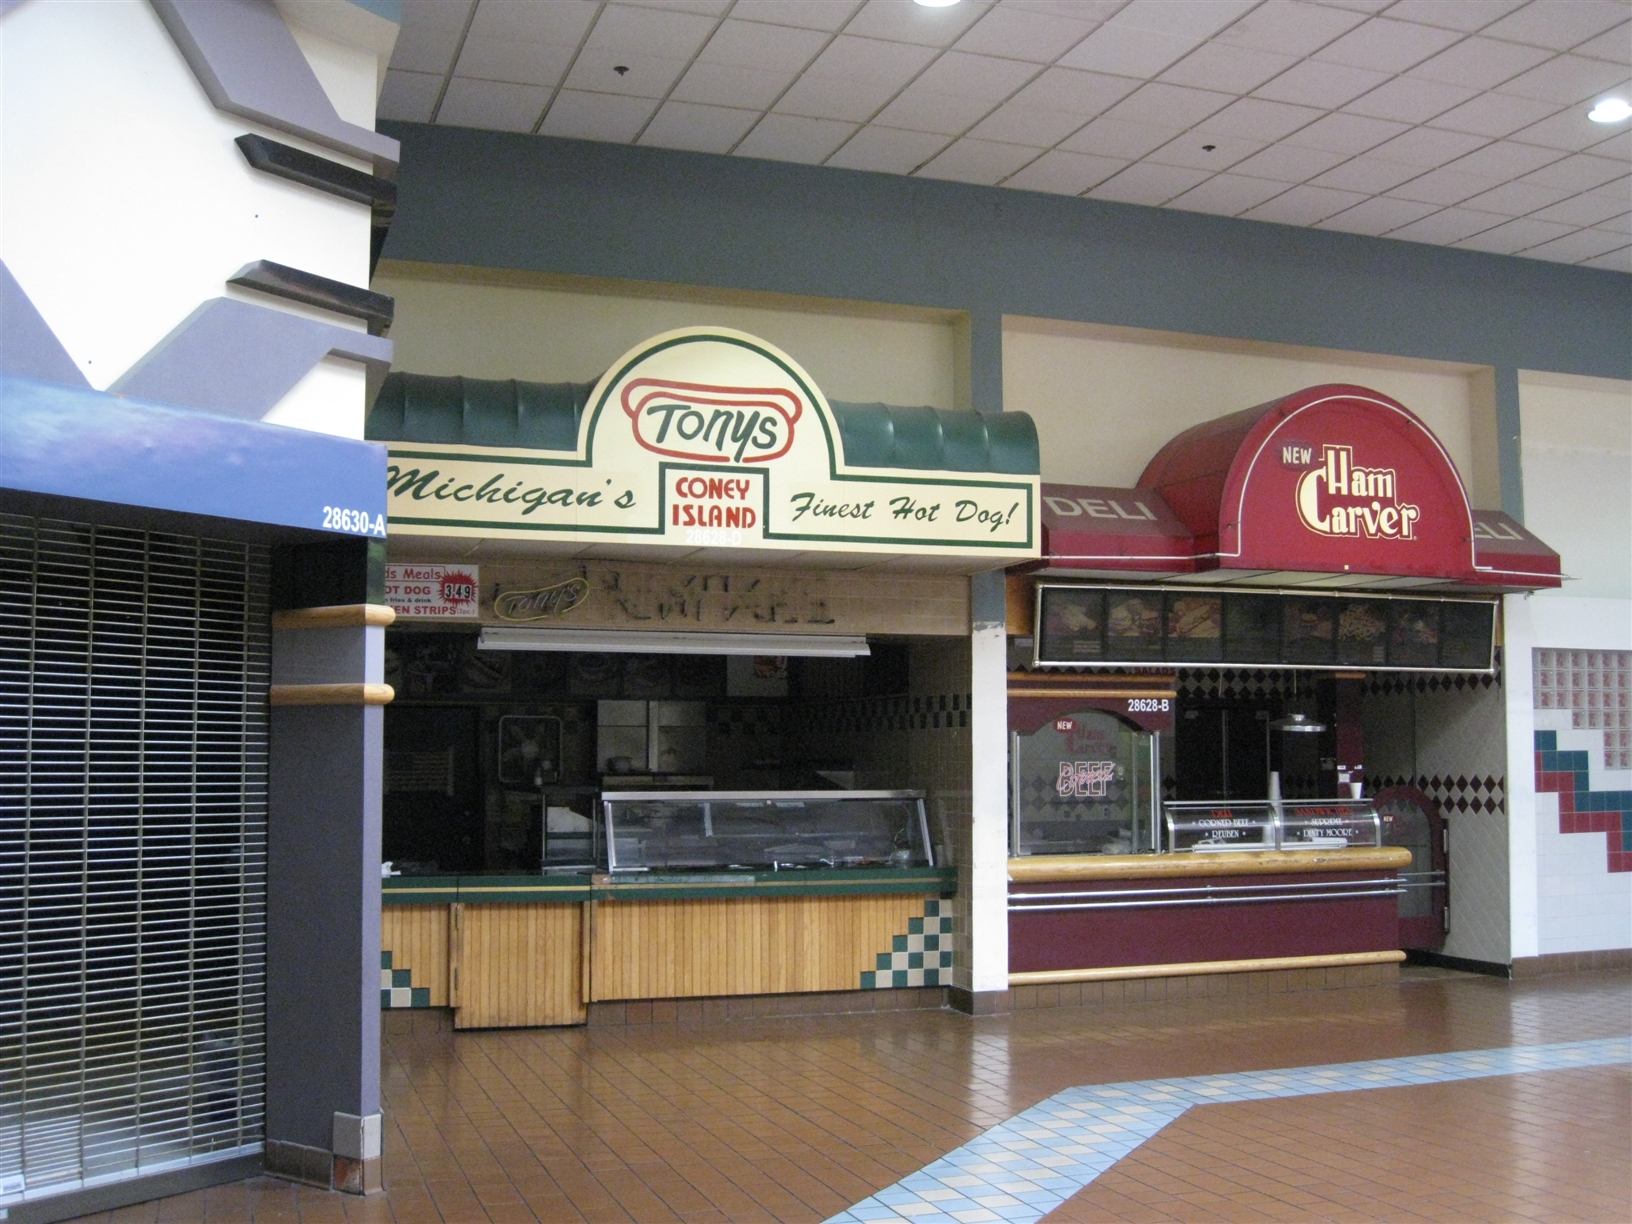 Universal Mall food court area in Warren, MI